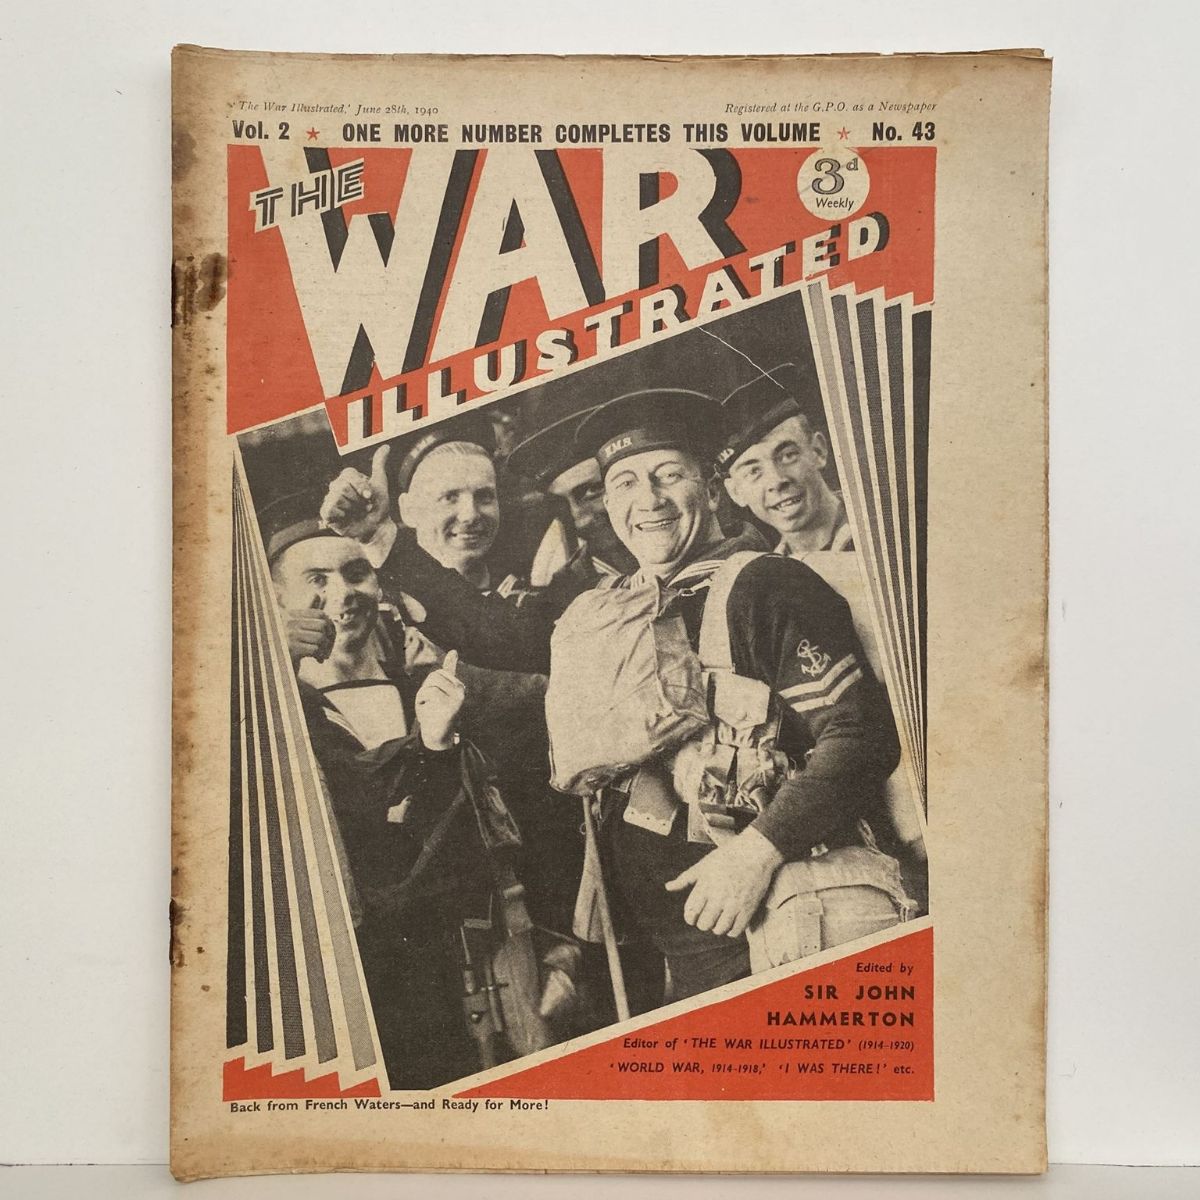 THE WAR ILLUSTRATED - Vol 2, No 43, 28th June 1940